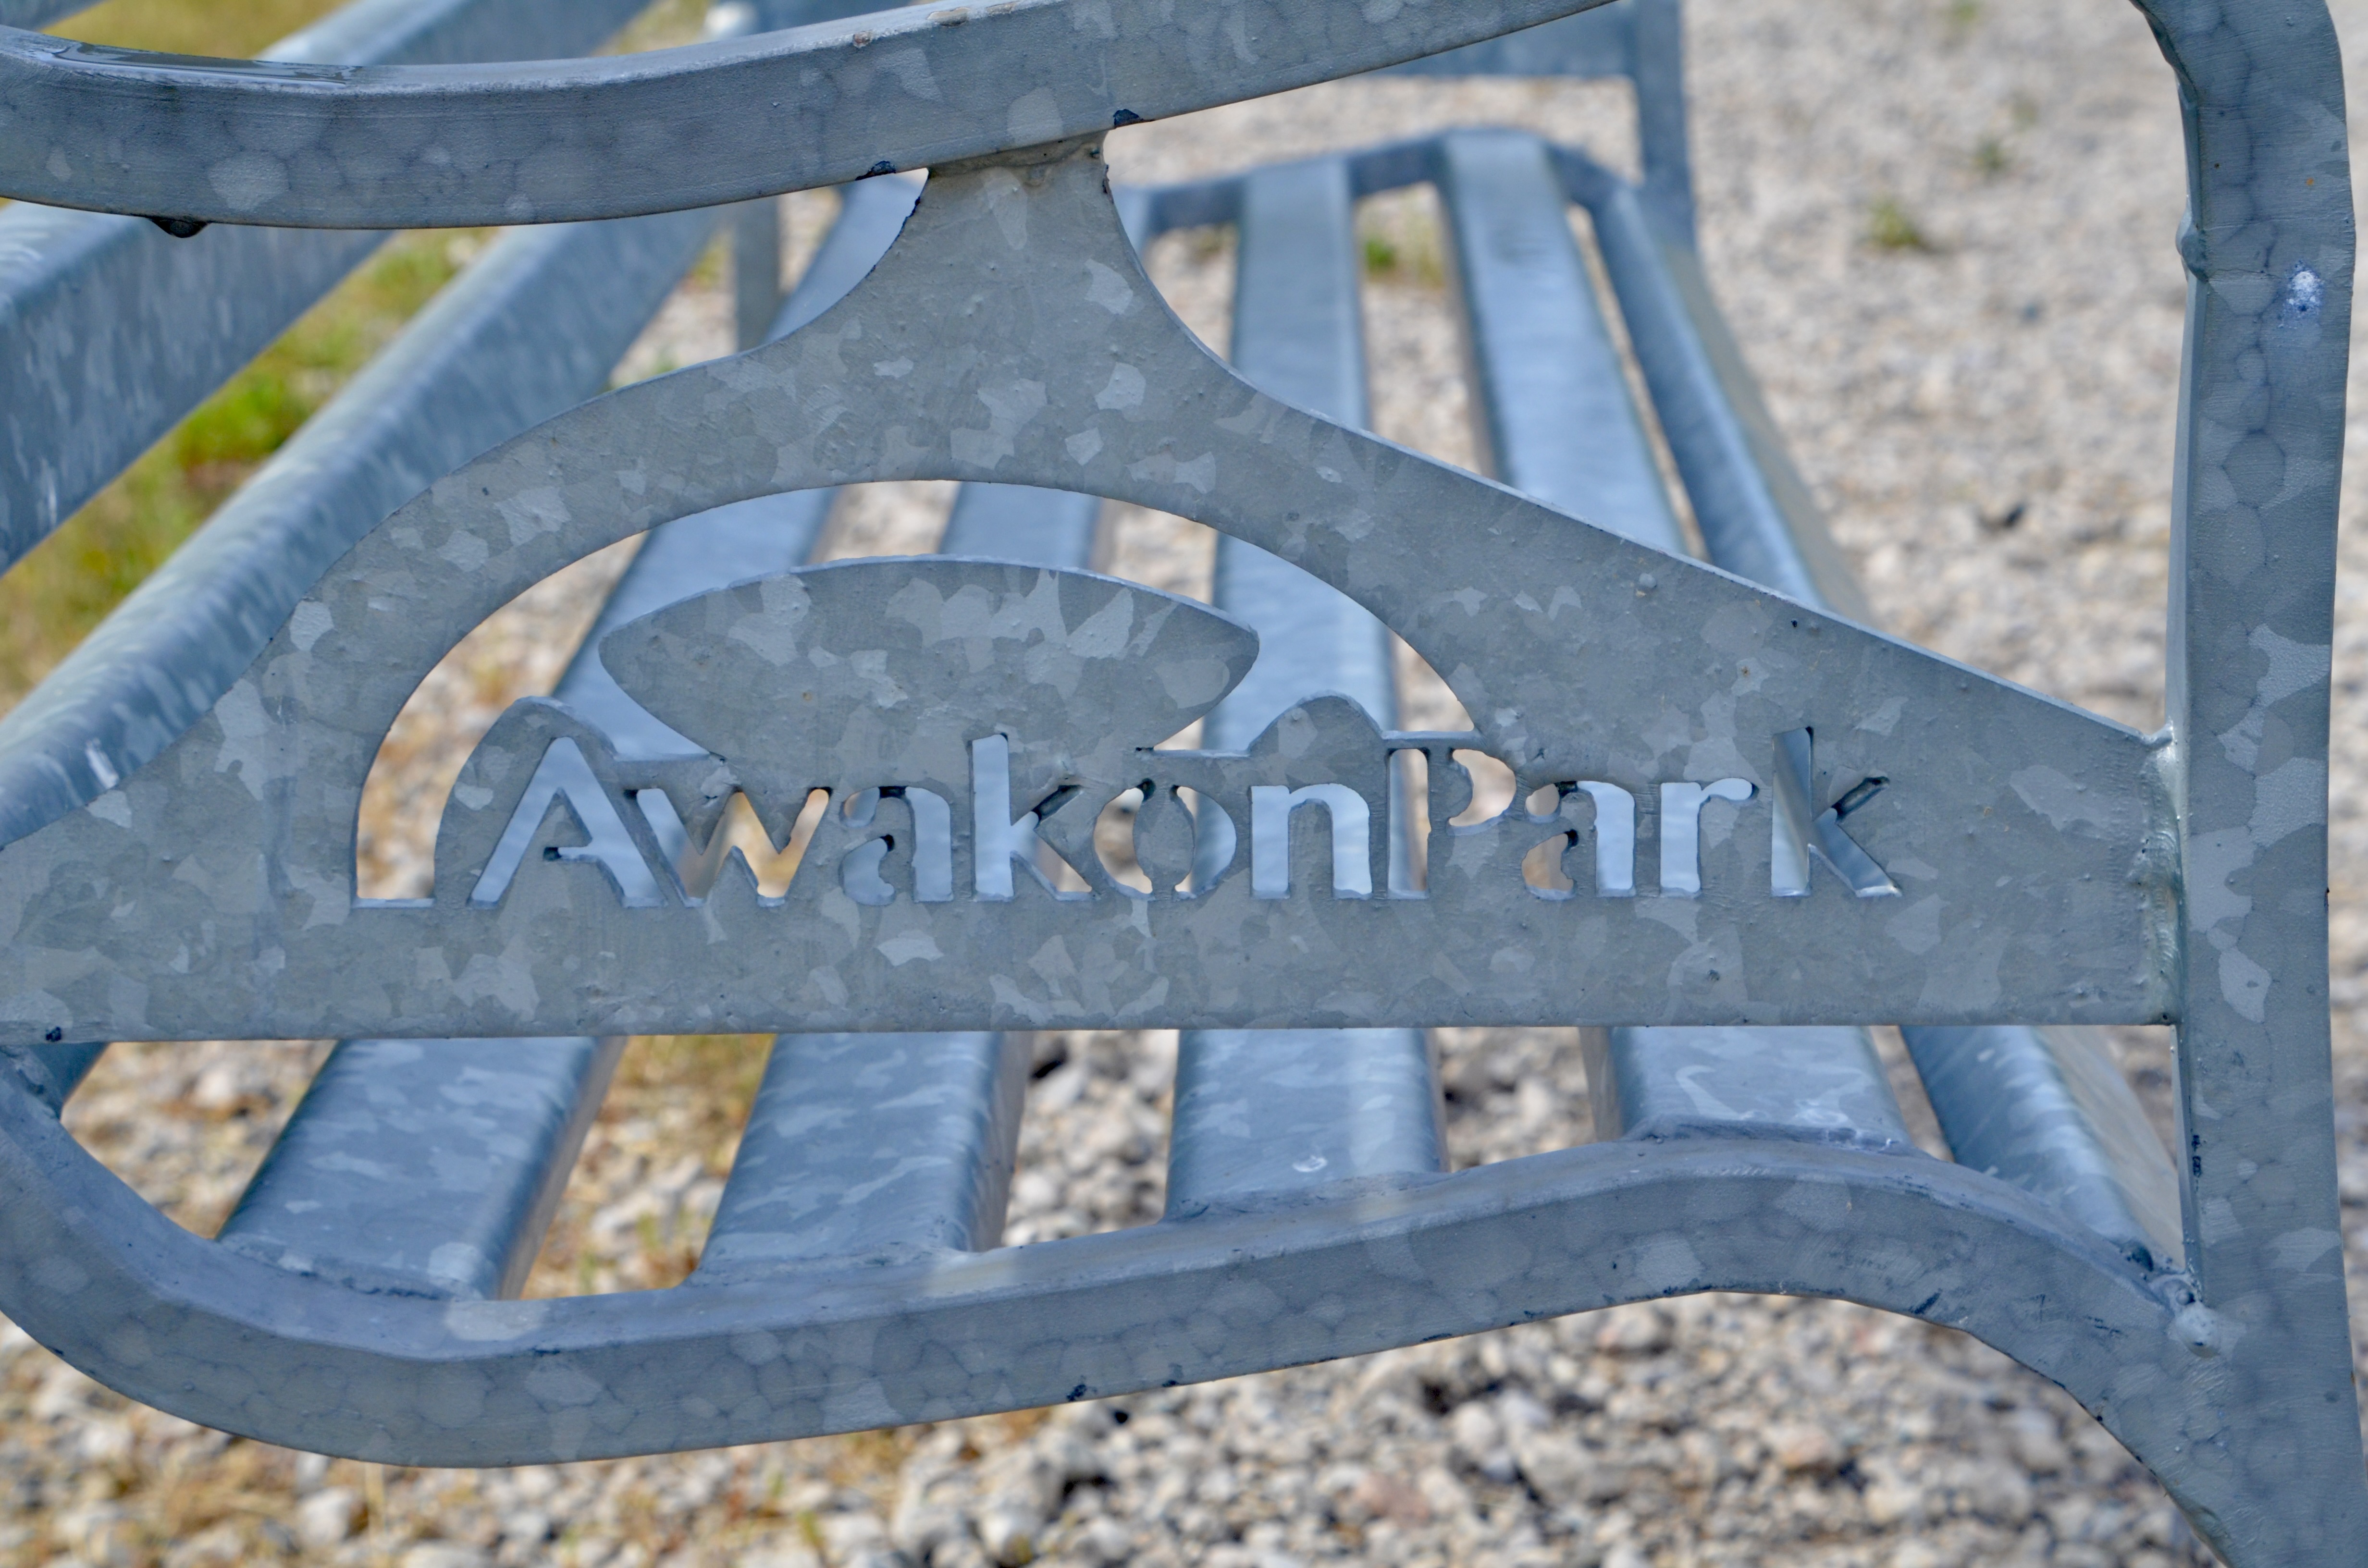 Awakon Park Bench Onaway Michigan